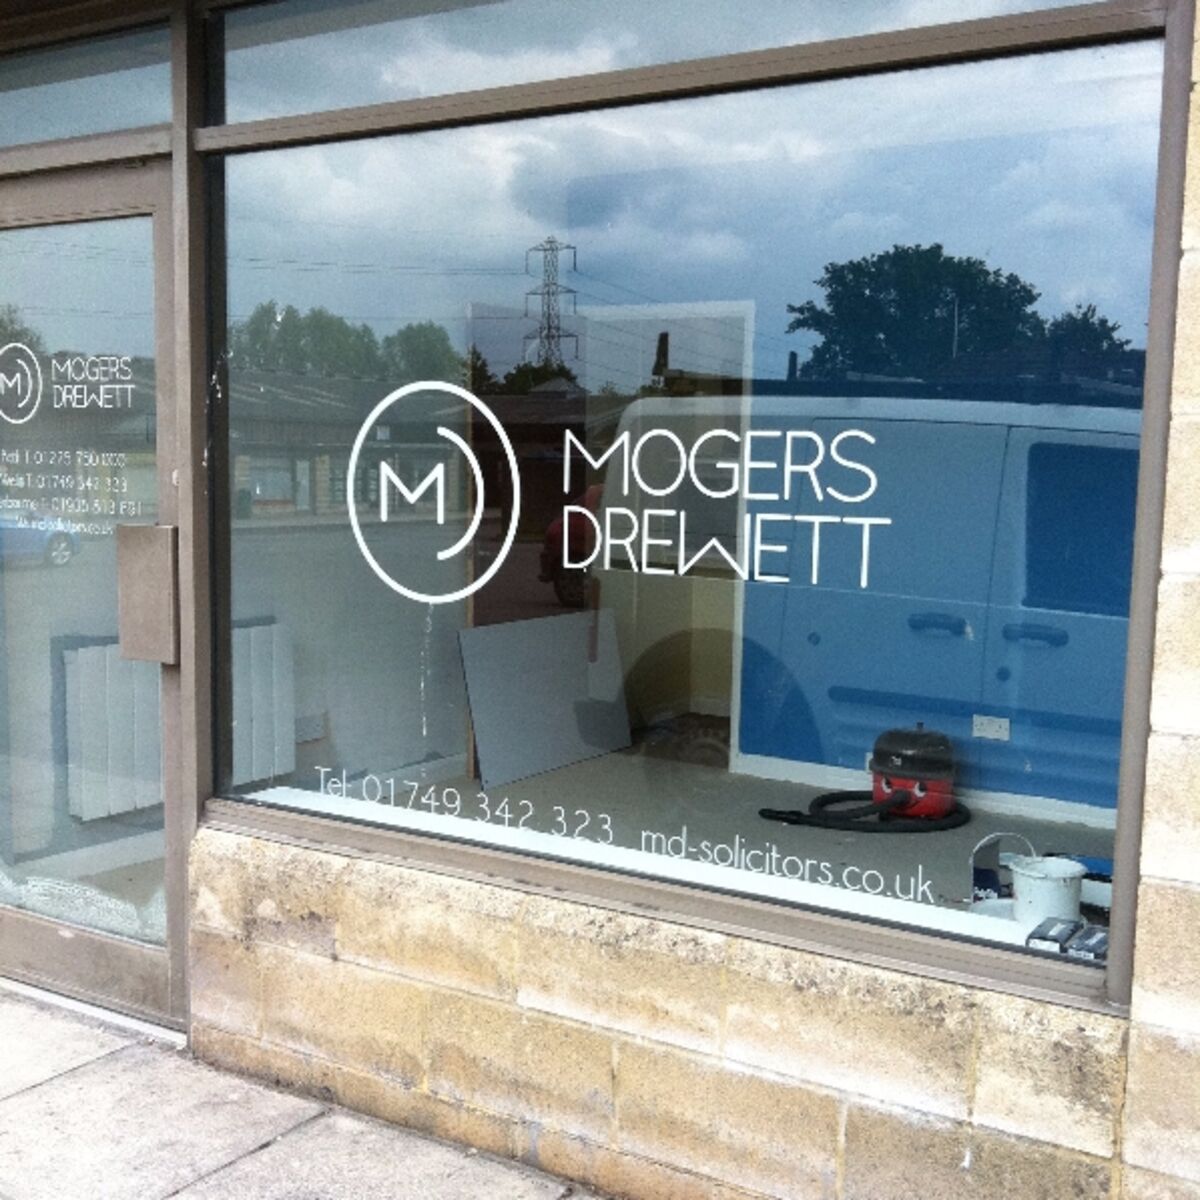 Mogers Drewett Window Graphics